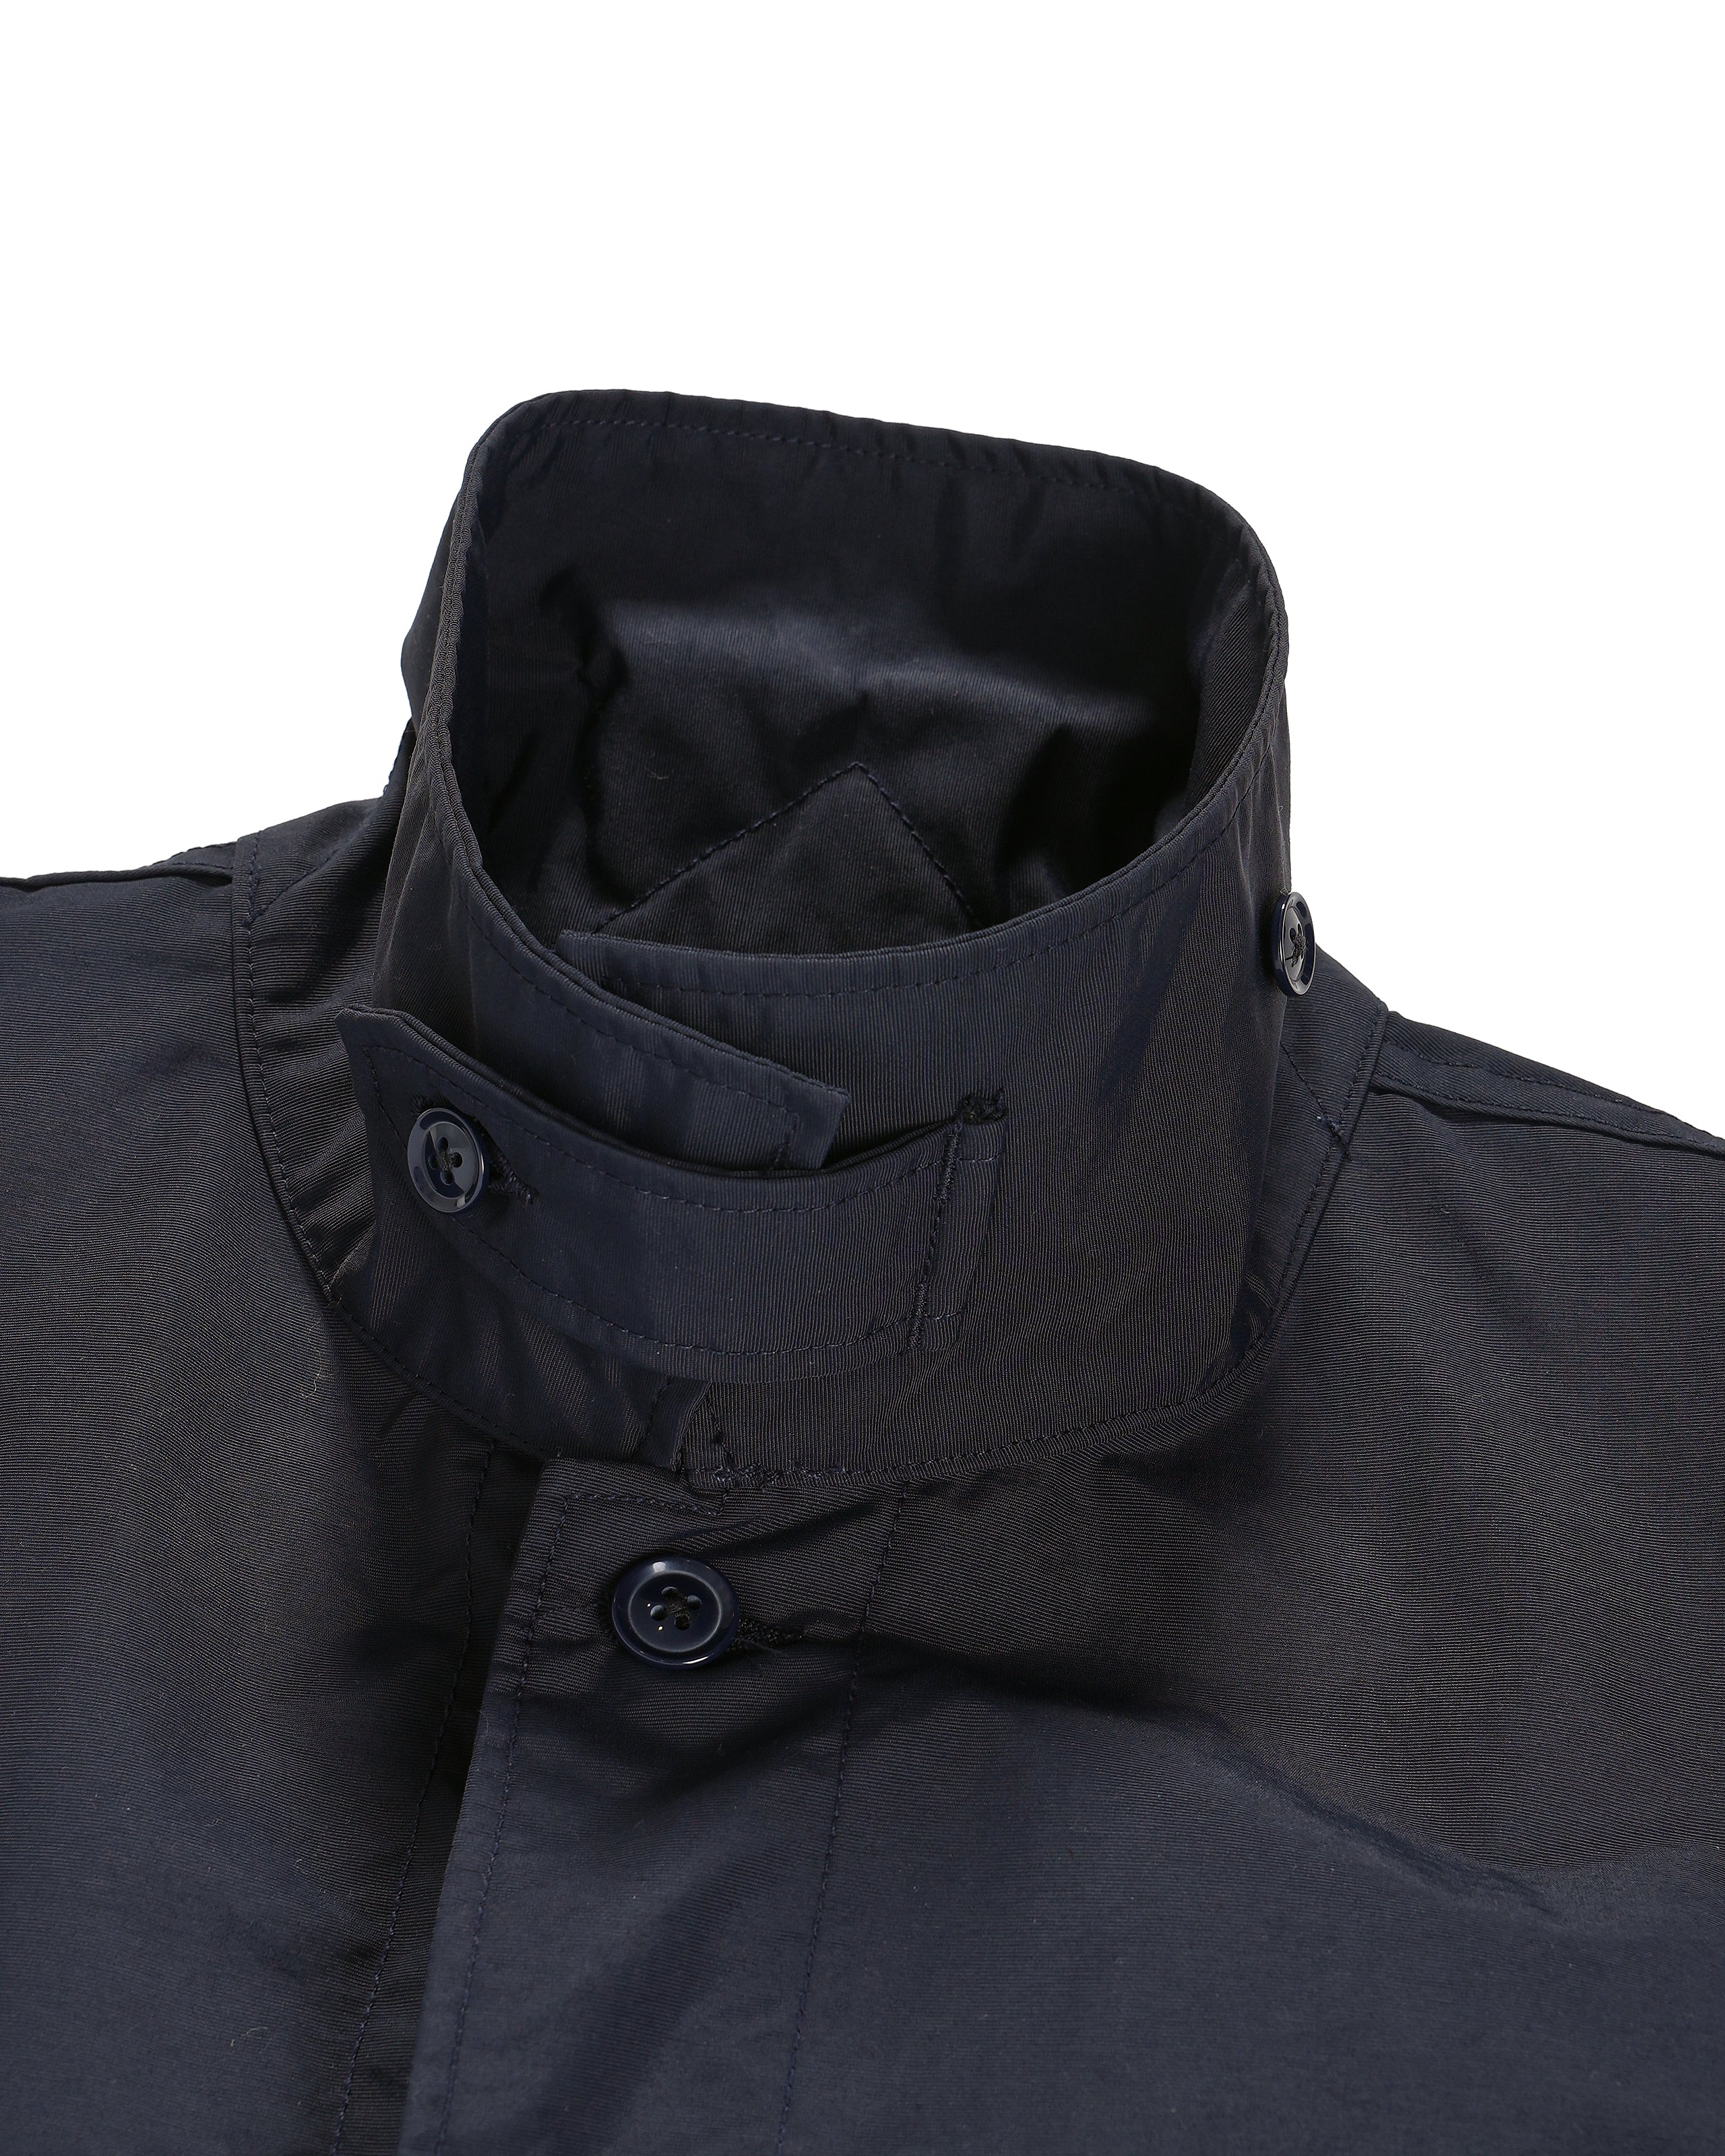 Suffolk Shirt Jacket - Dk. Navy Nylon Poplin